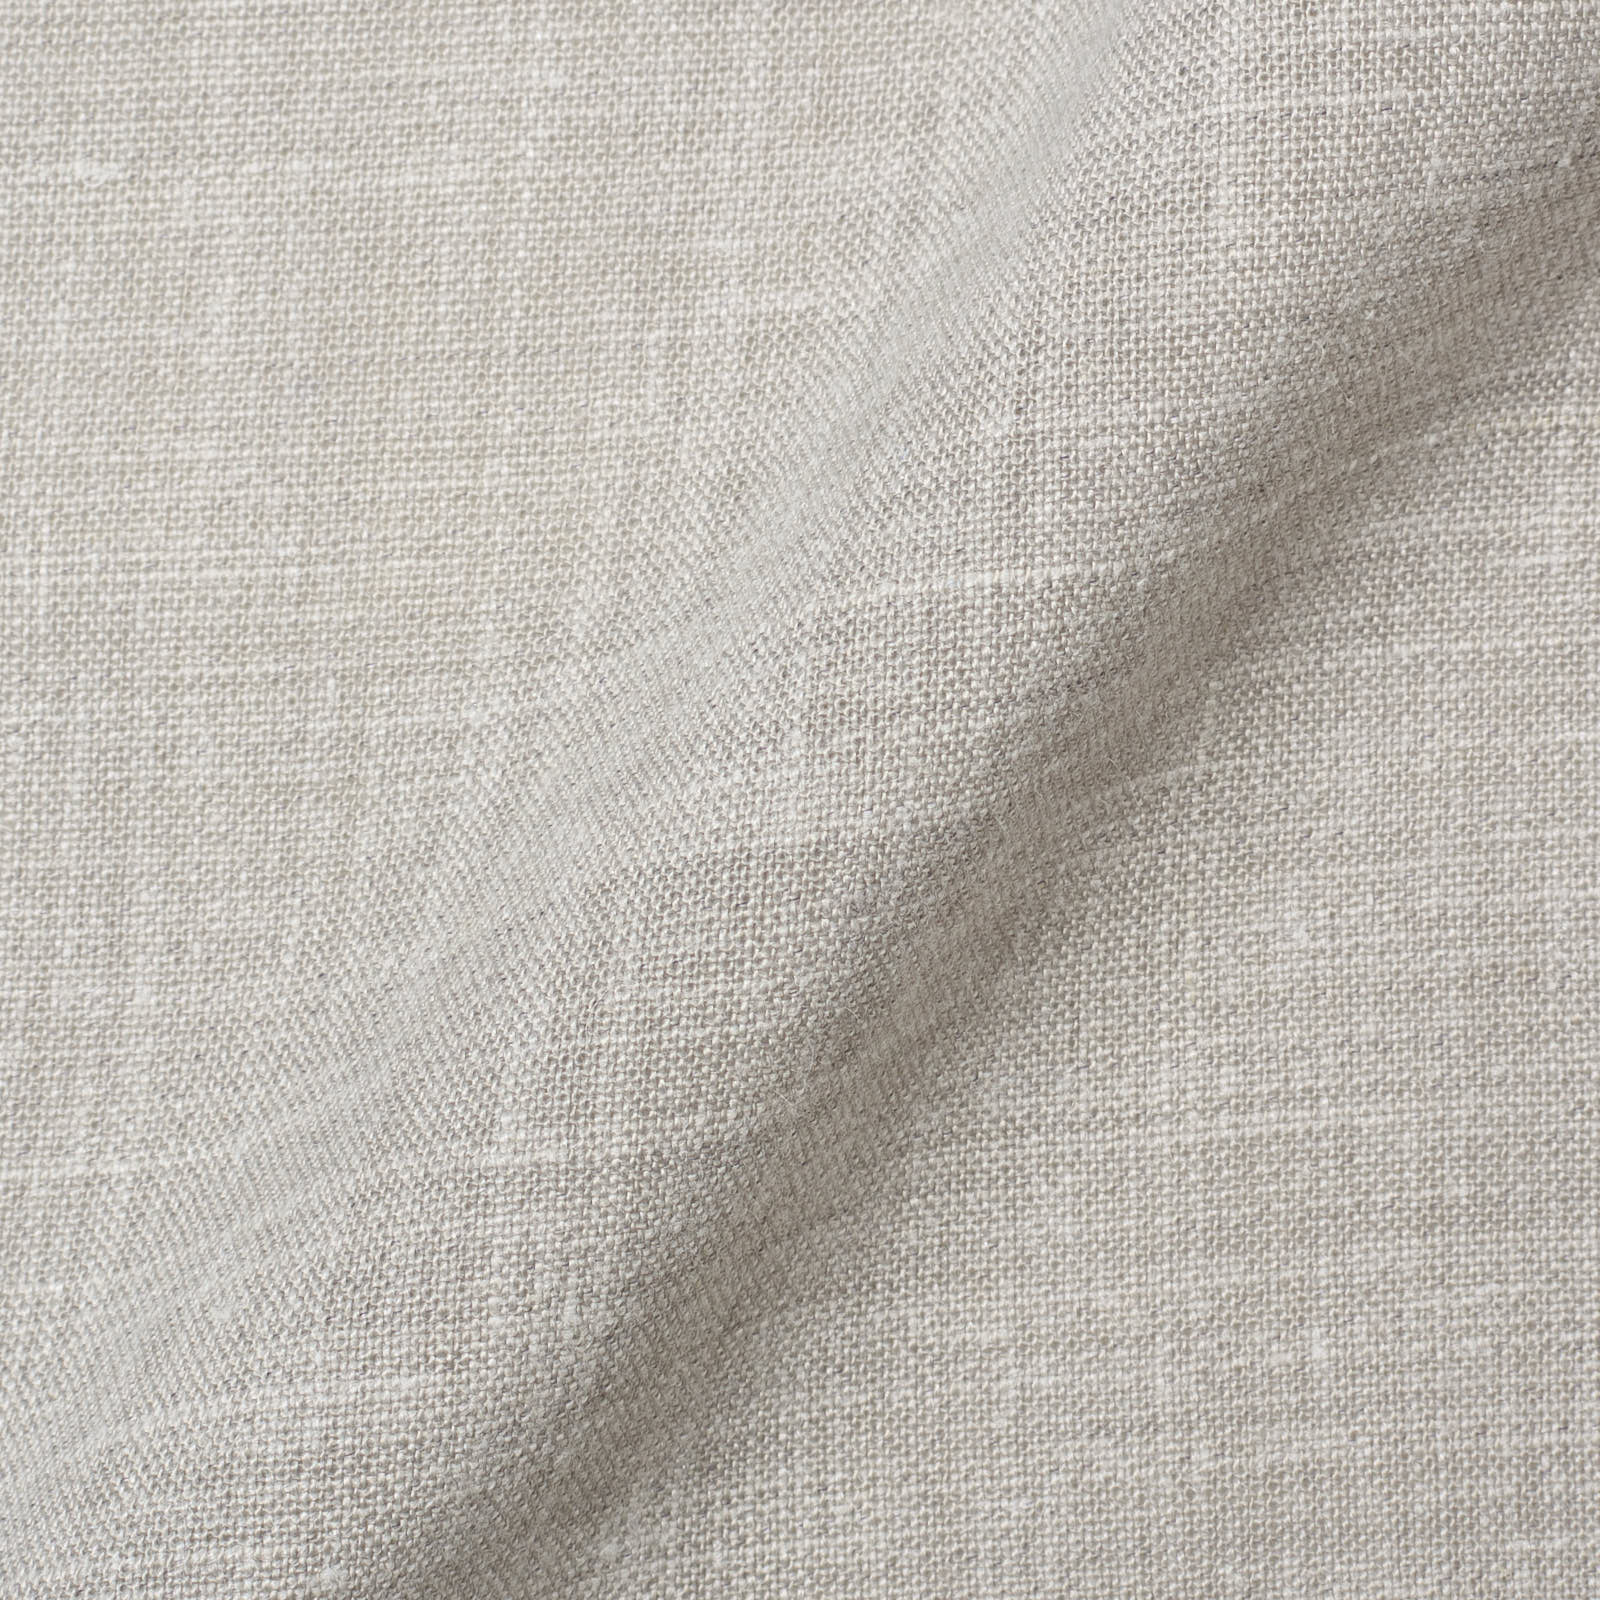 SARTORIA PARTENOPEA Gray Linen-Polyester Unlined Jacket NEW  Current Model